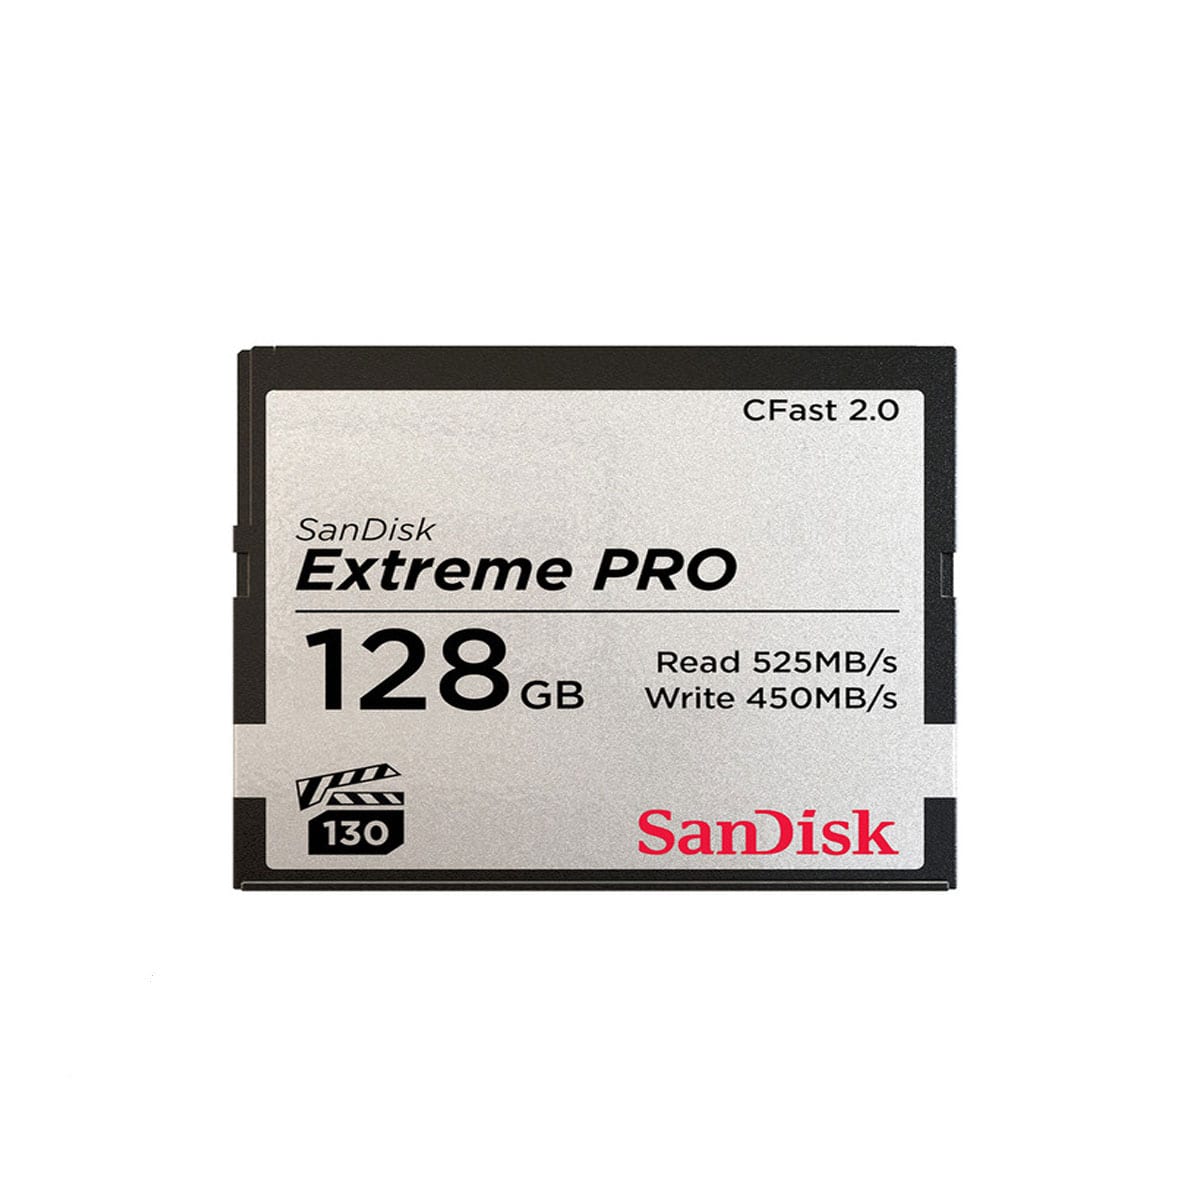 Sandisk CFast Card, 128GB, 525MB/s